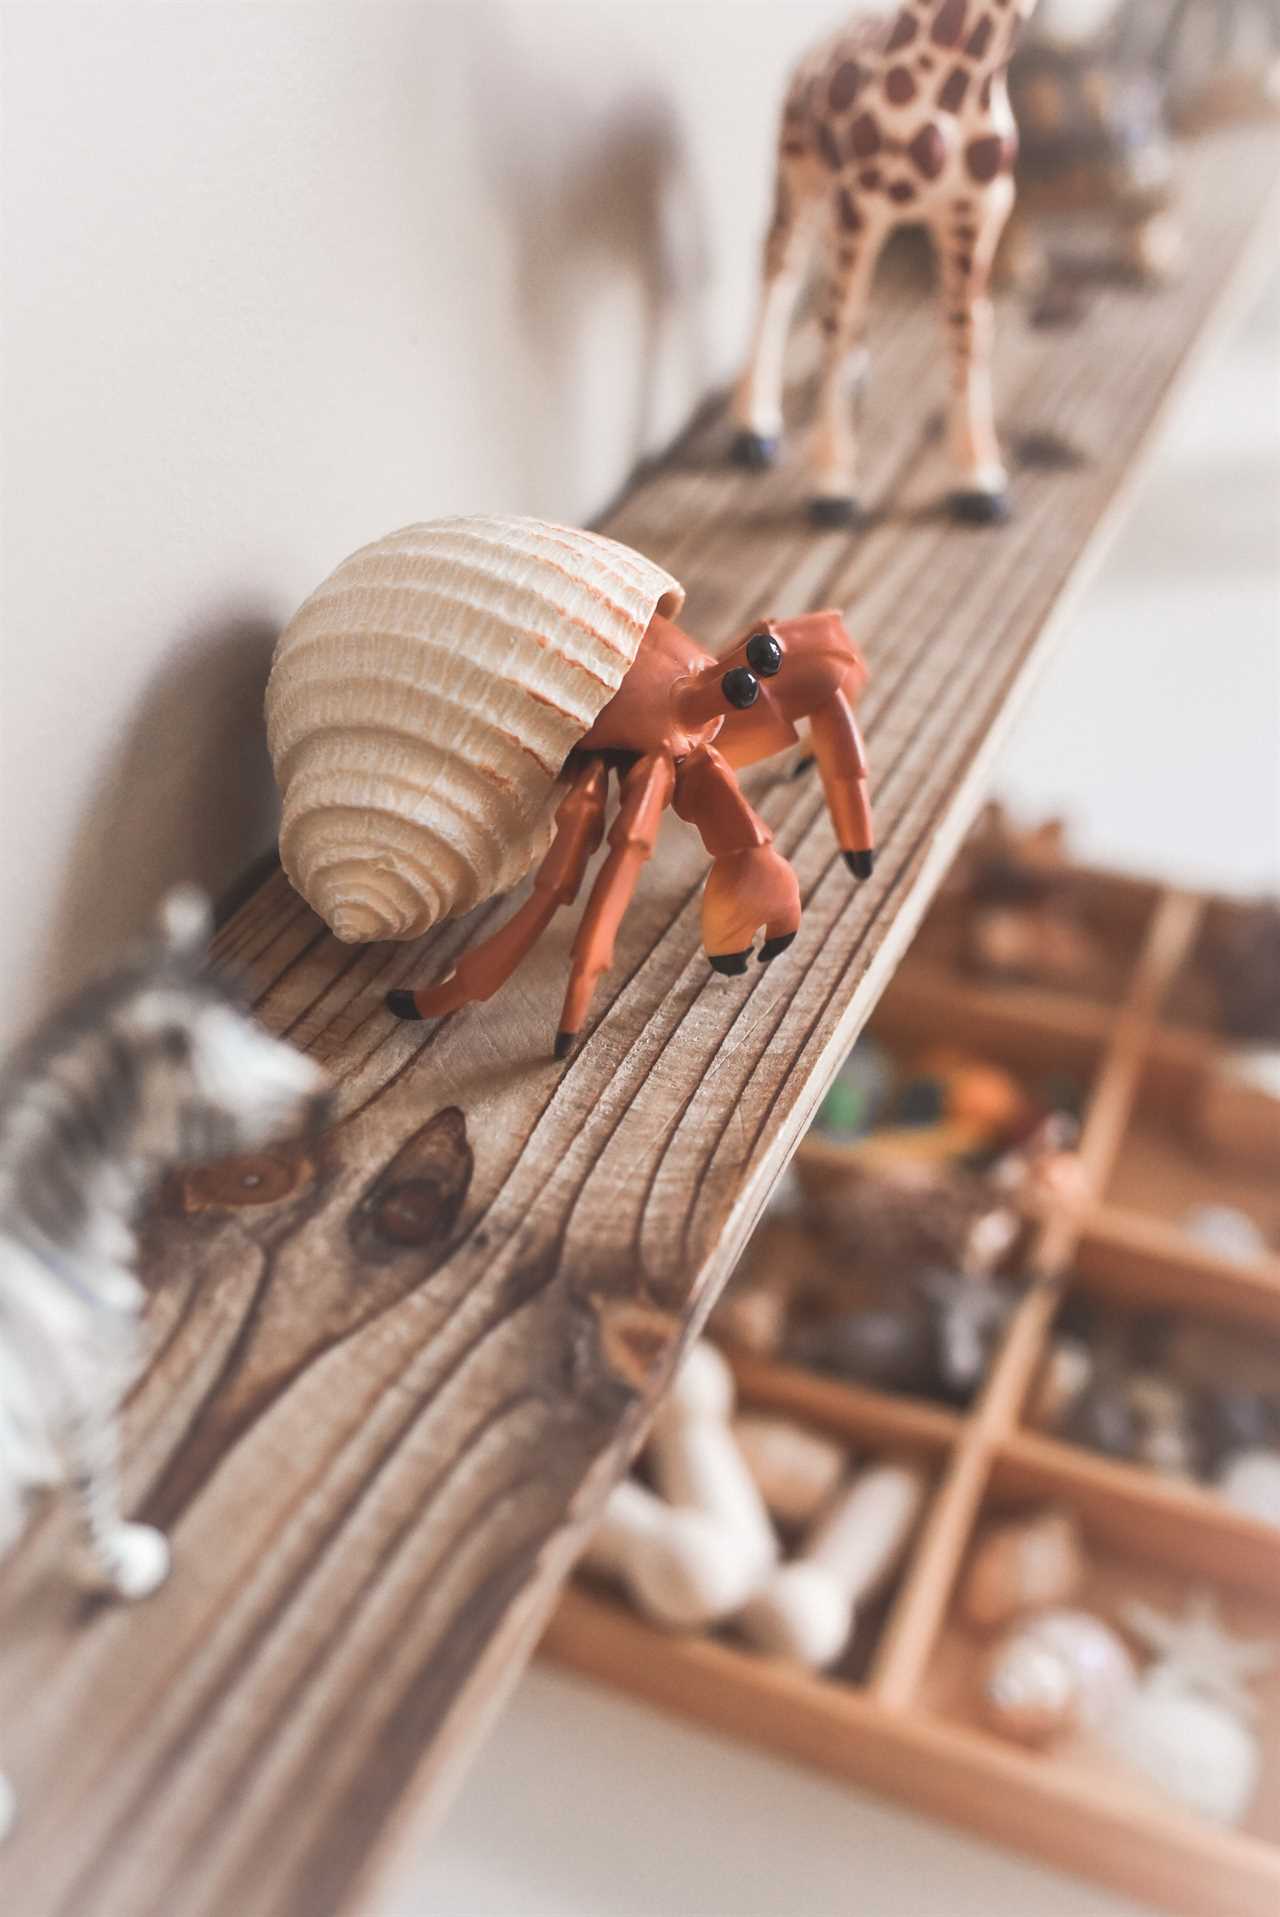 wooden montessori toys